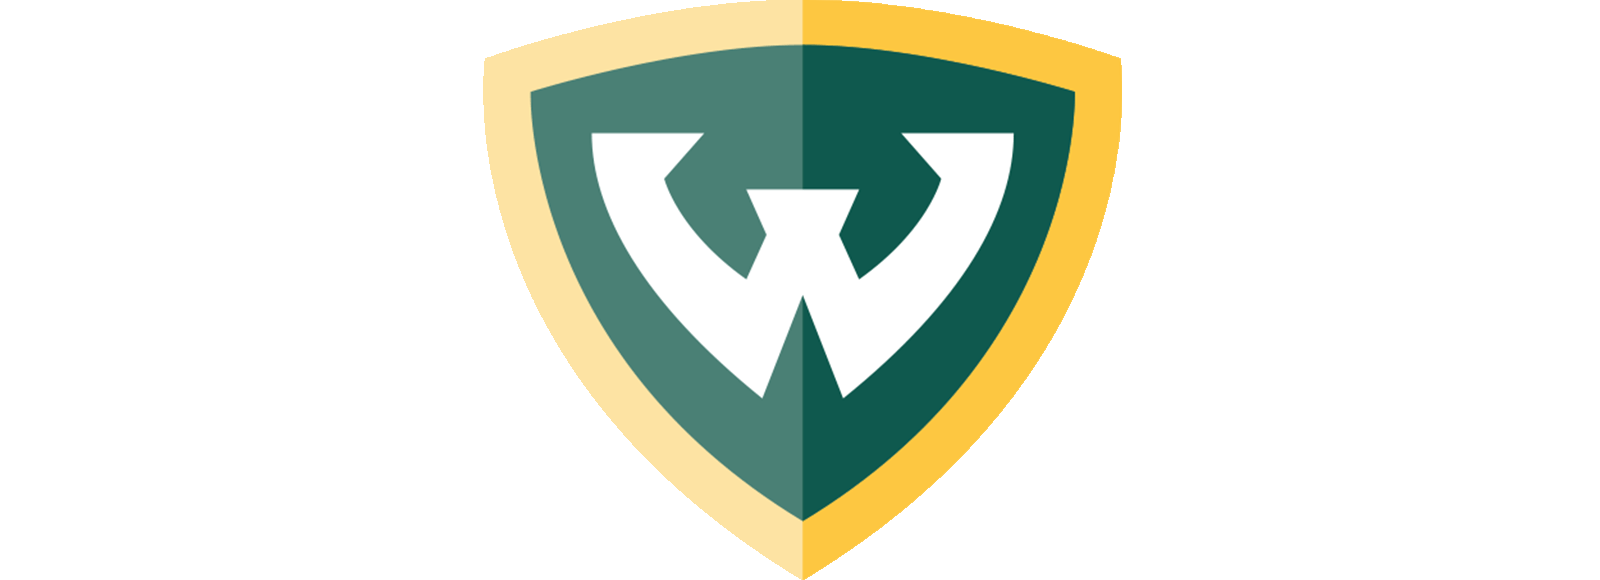 Wayne State University Logo.